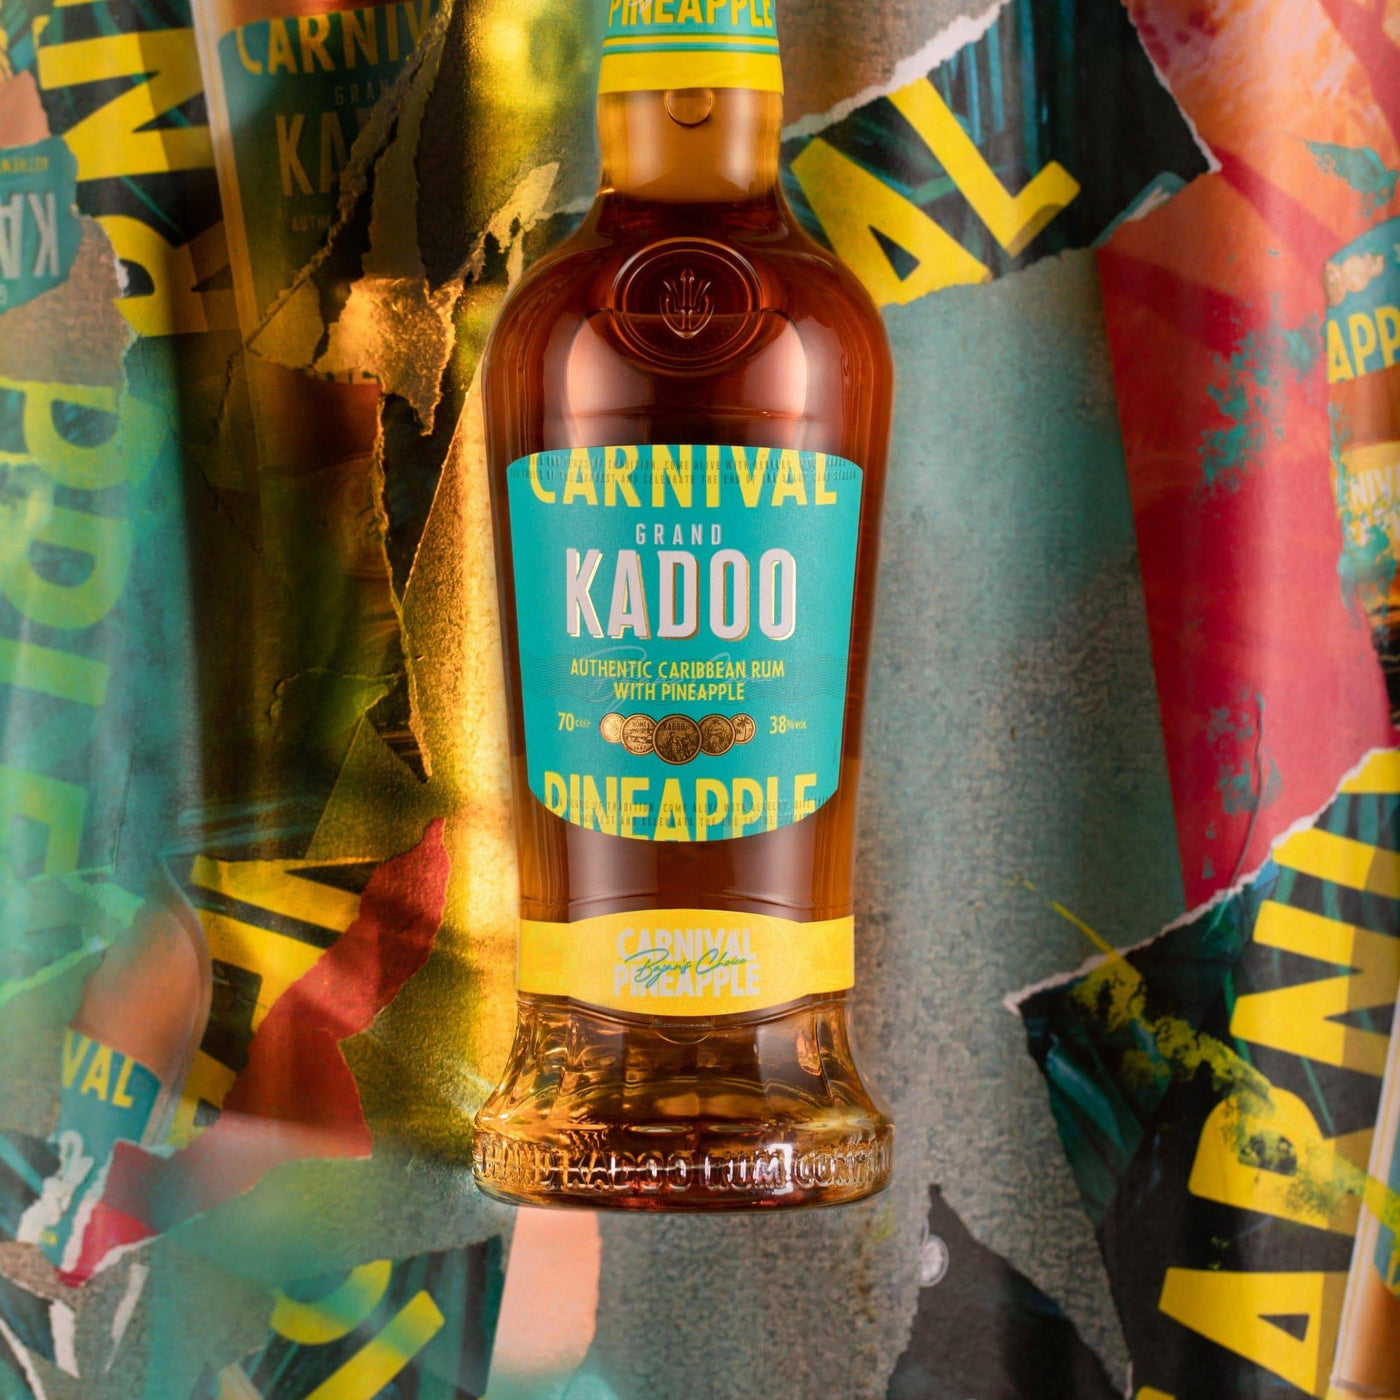 Grand Kadoo Carnival Pineapple Rum - Spiritly